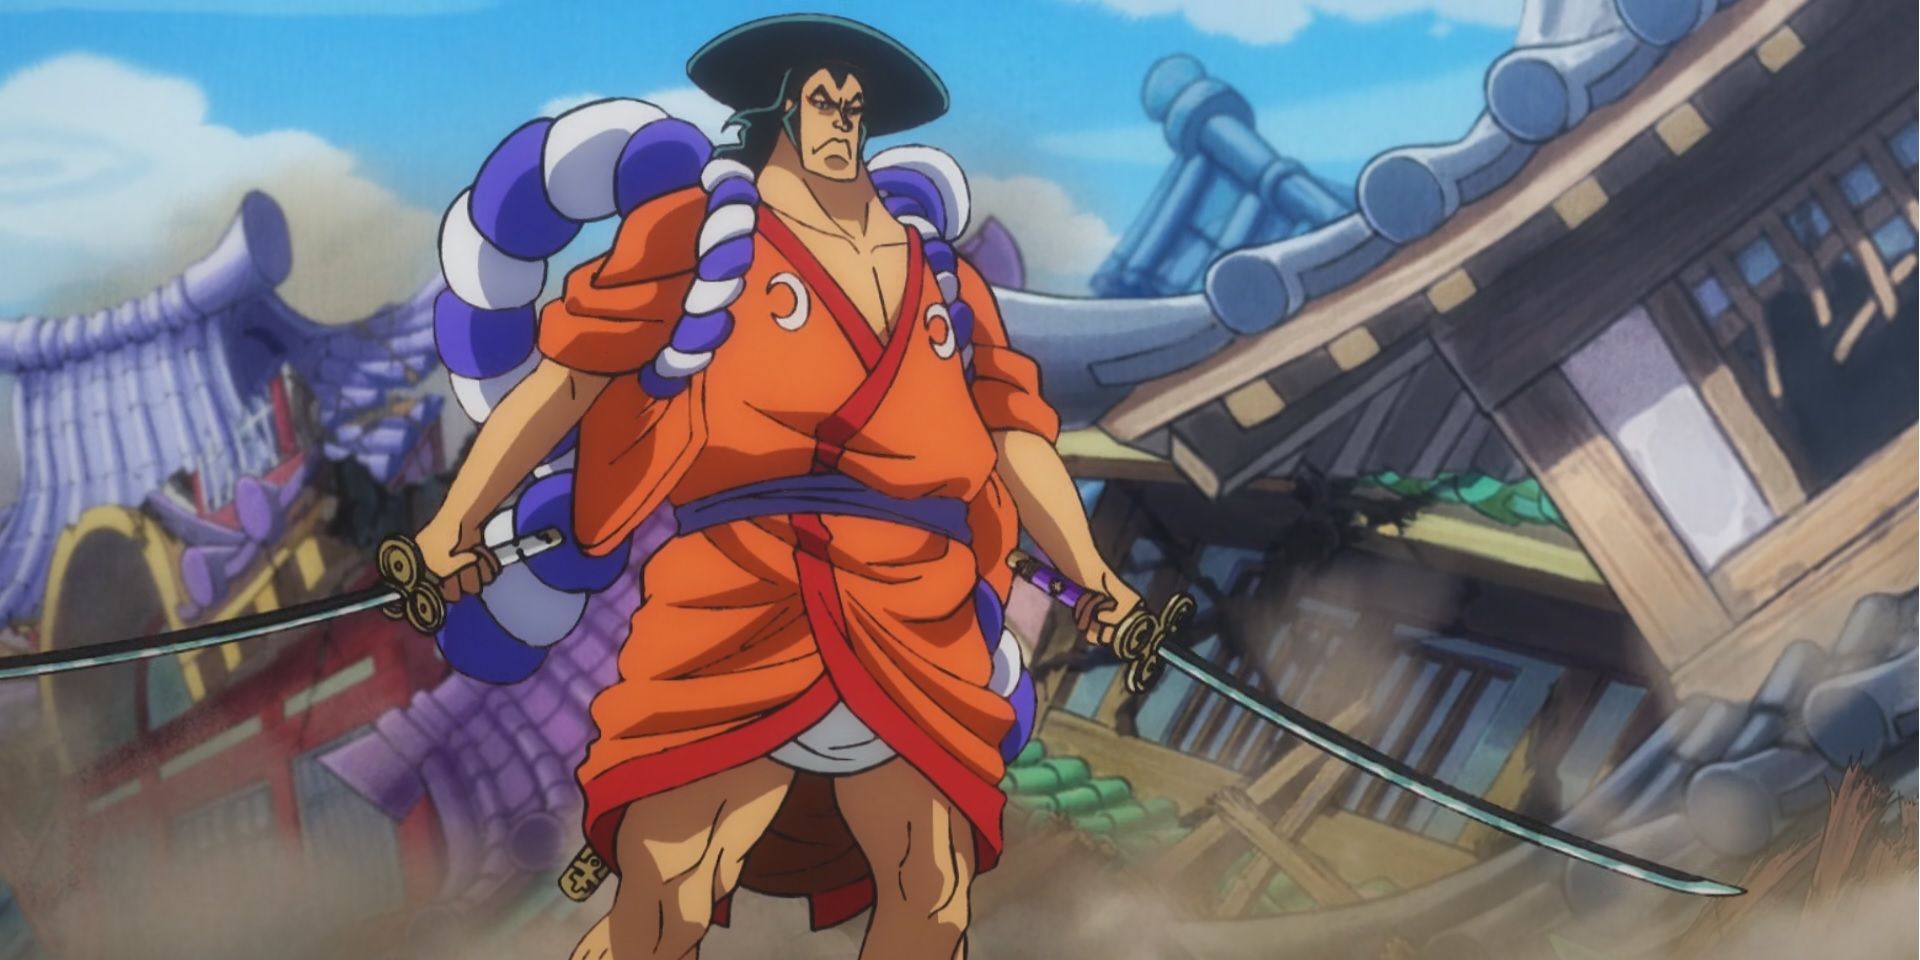 Kozuki Oden, legendary swordsman of Wano, in combat during a One Piece flashback